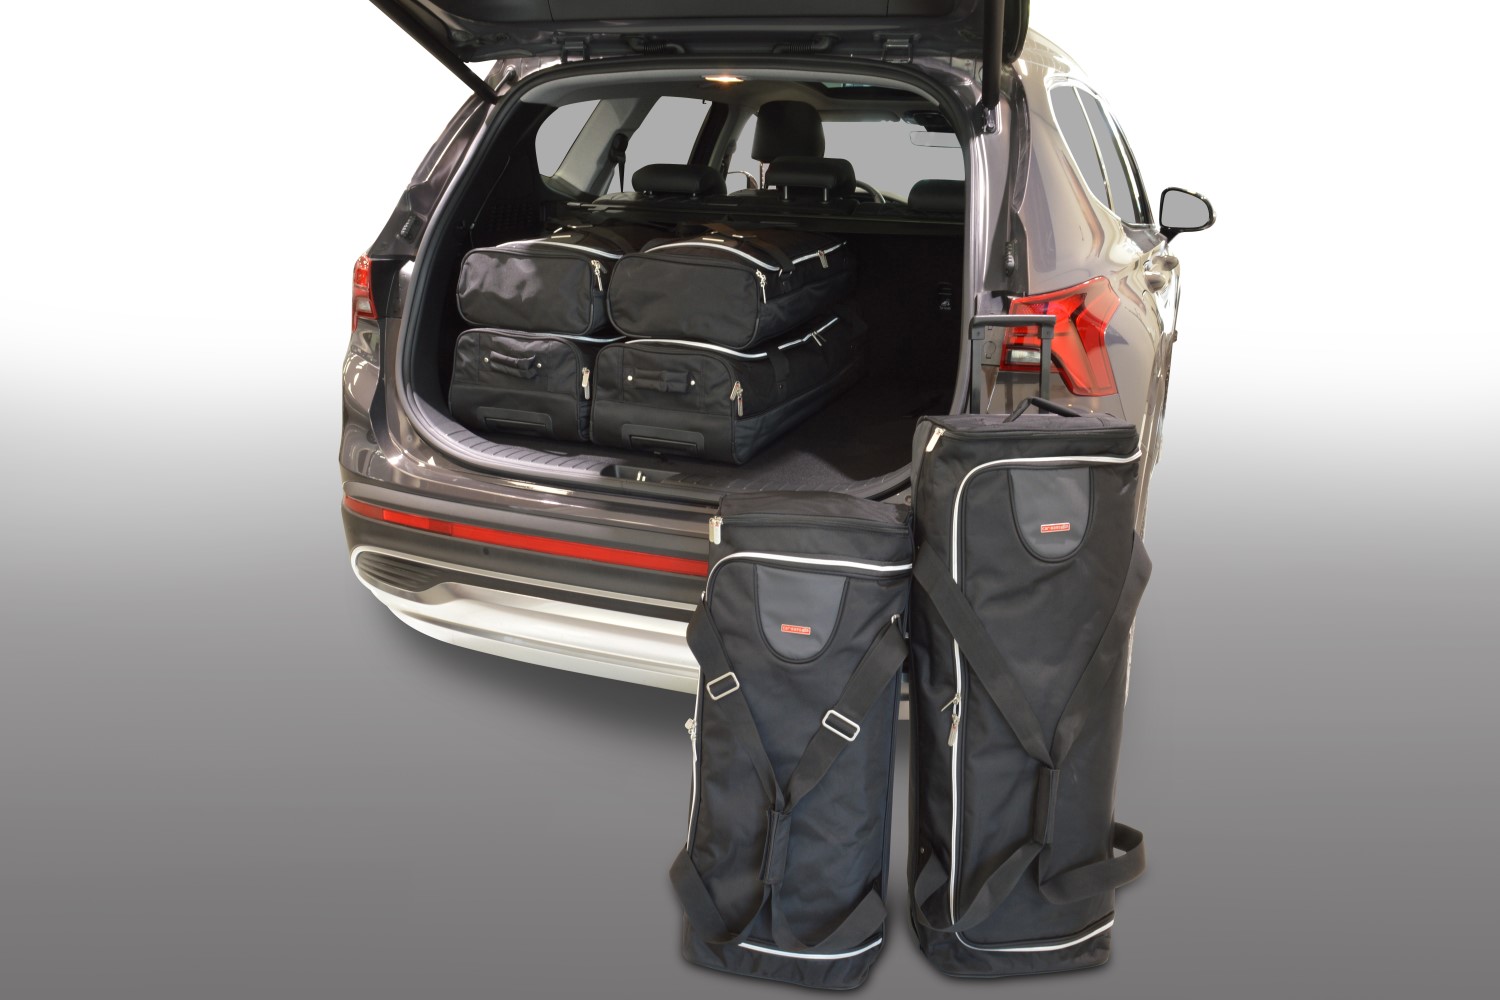 Kofferraumwanne Yoursize (TM) Santa CPE Fe Hyundai Carbox |